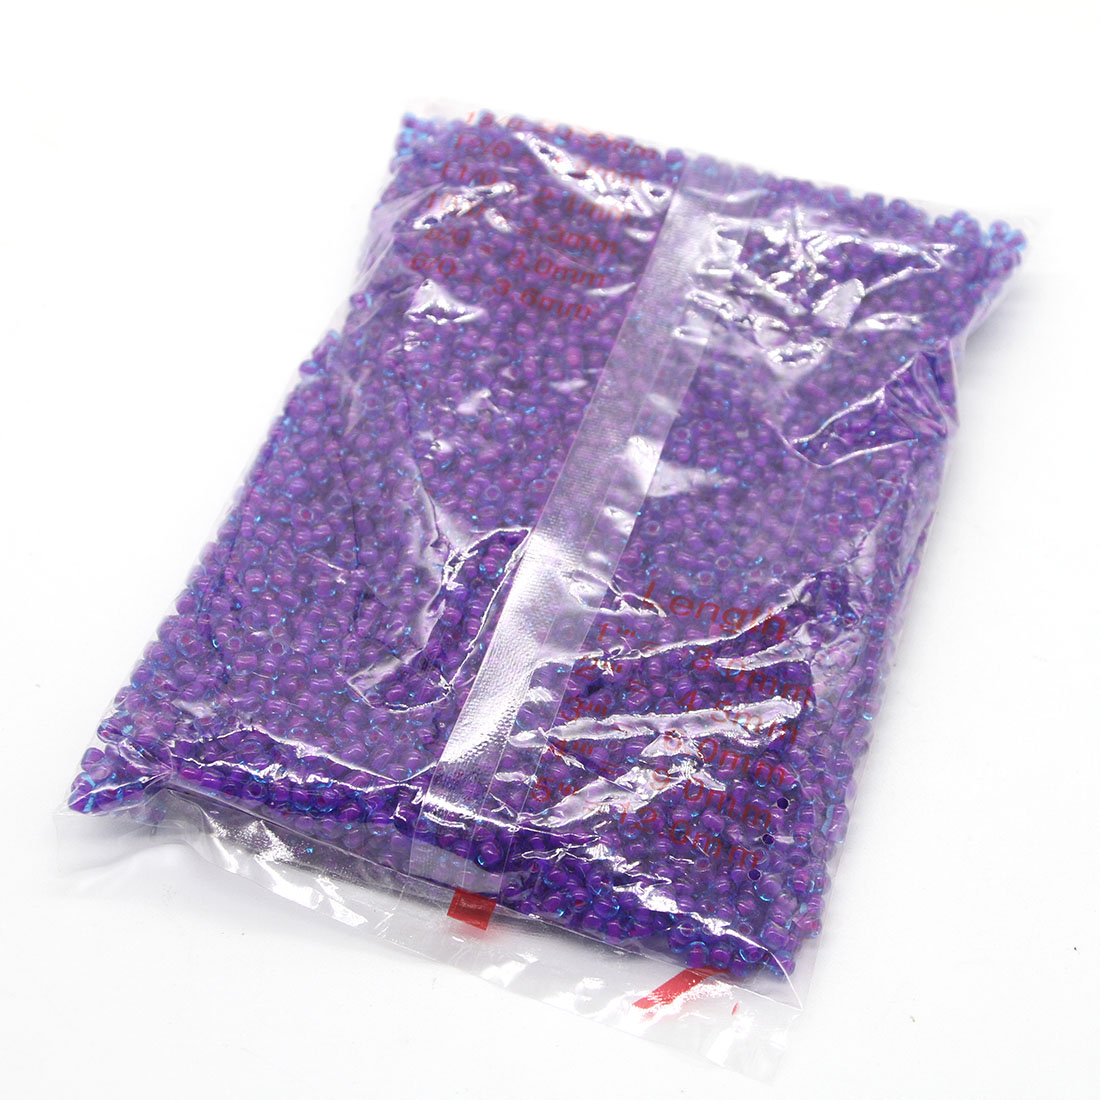 Dark purple 2mm 30,000 packs